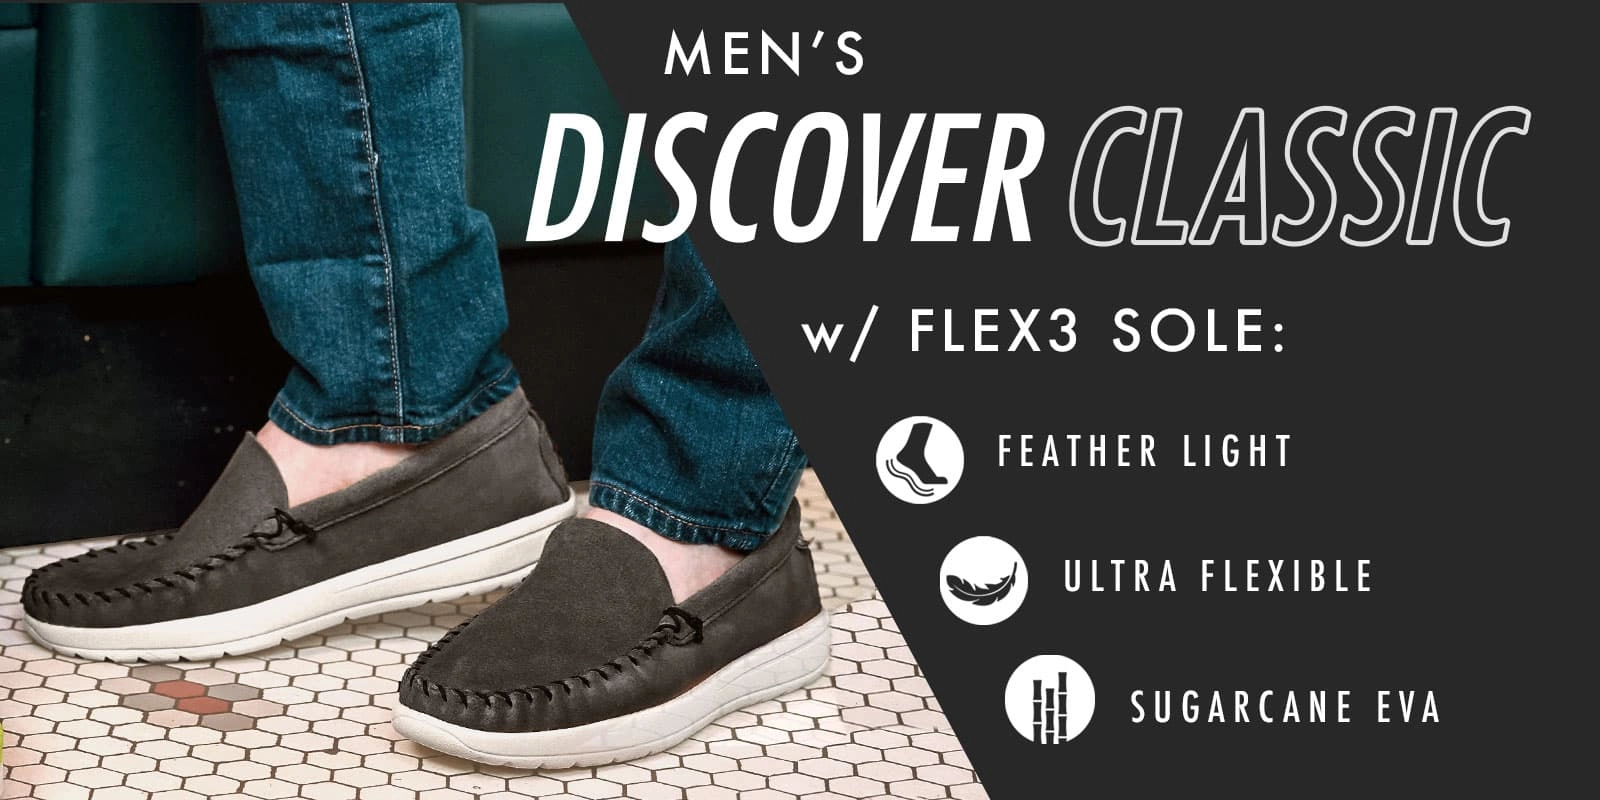 Men's Discover Classic Moc - Minnetonka: Feather light, ultra flexible, sugarcane EVA